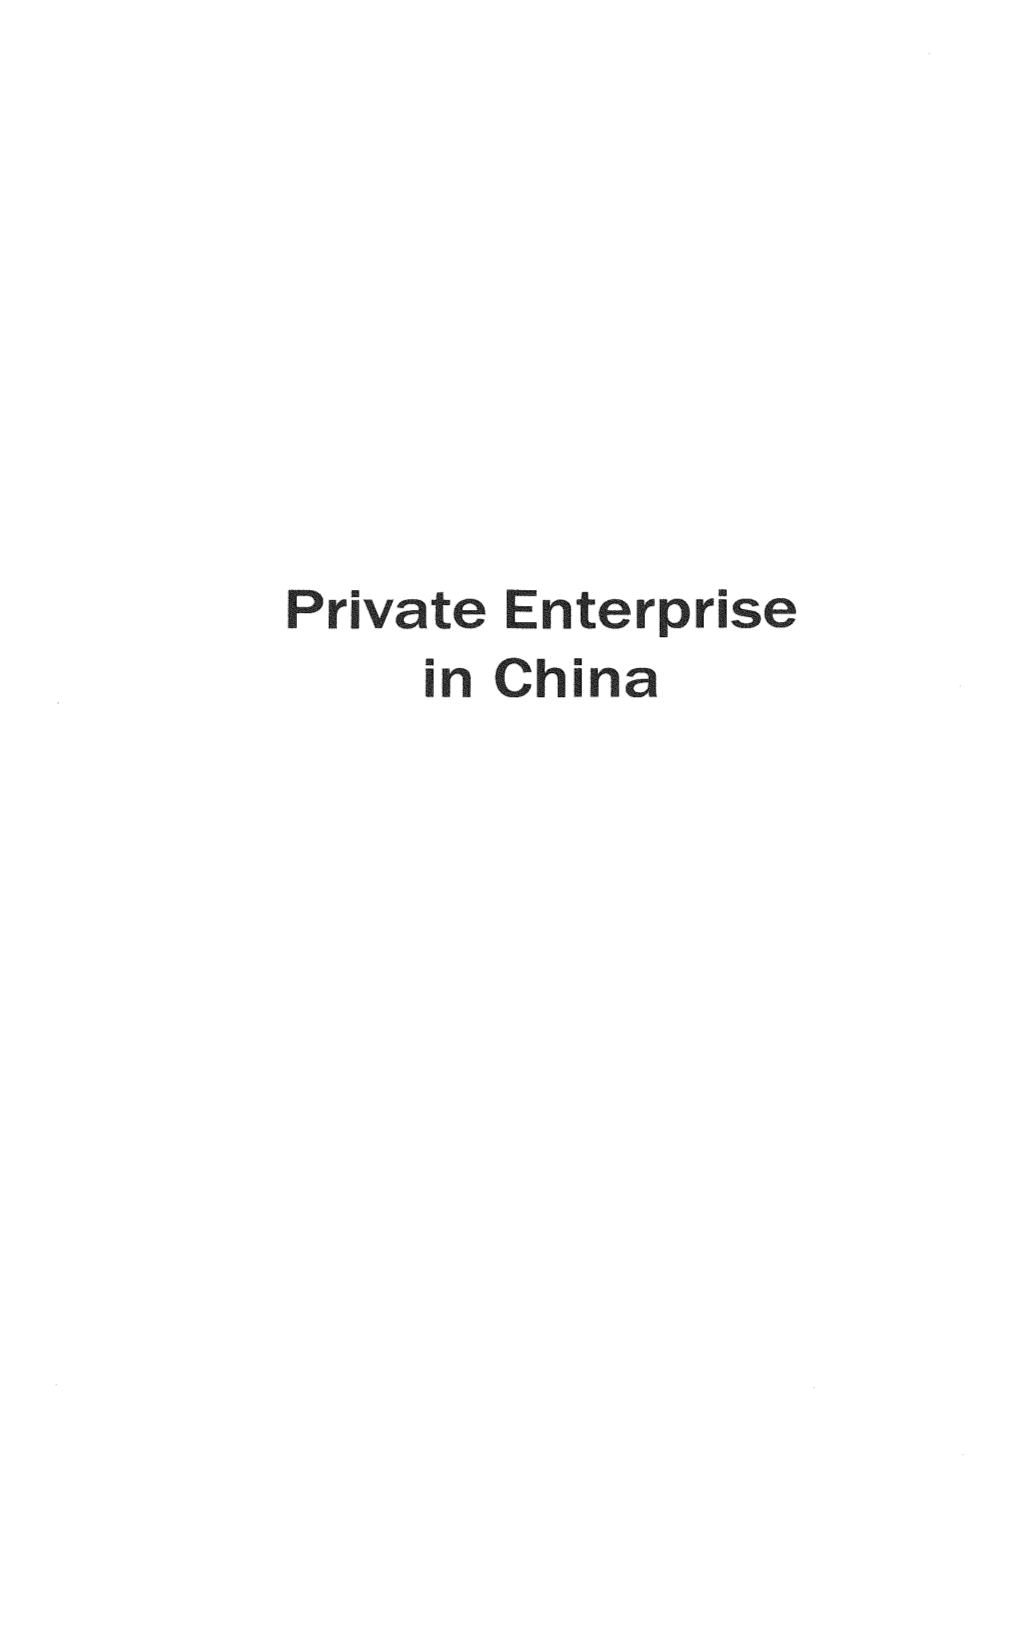 Private Enterprise in China / Ross Garnaut